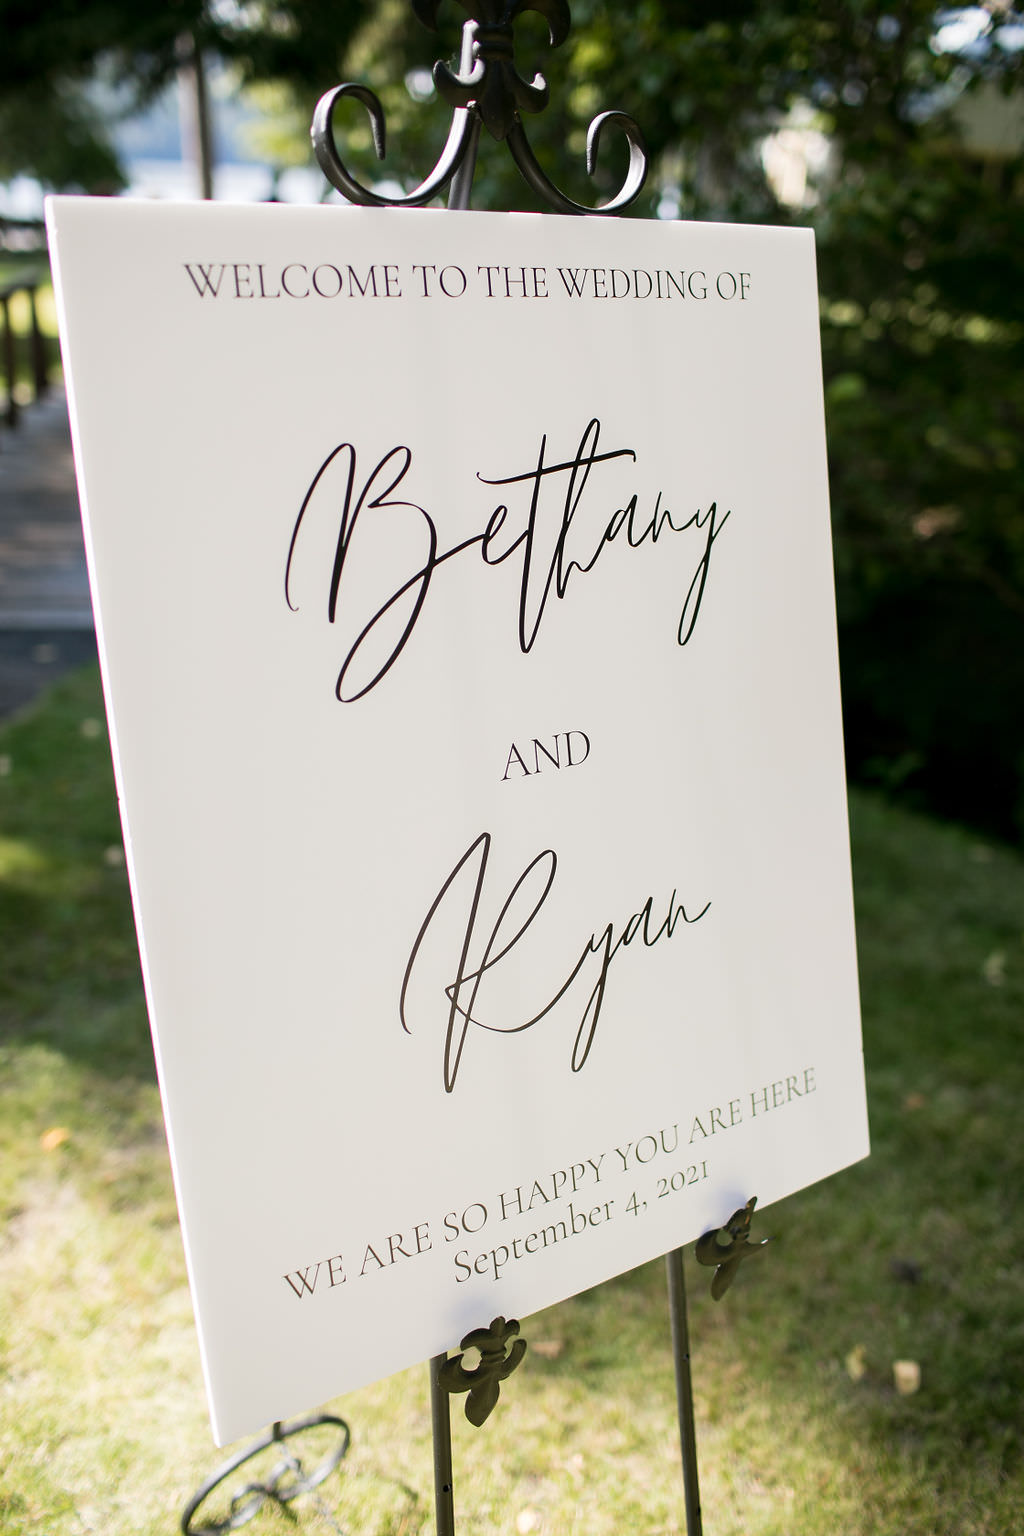 Custom wedding welcome sign at a Montana wedding venue